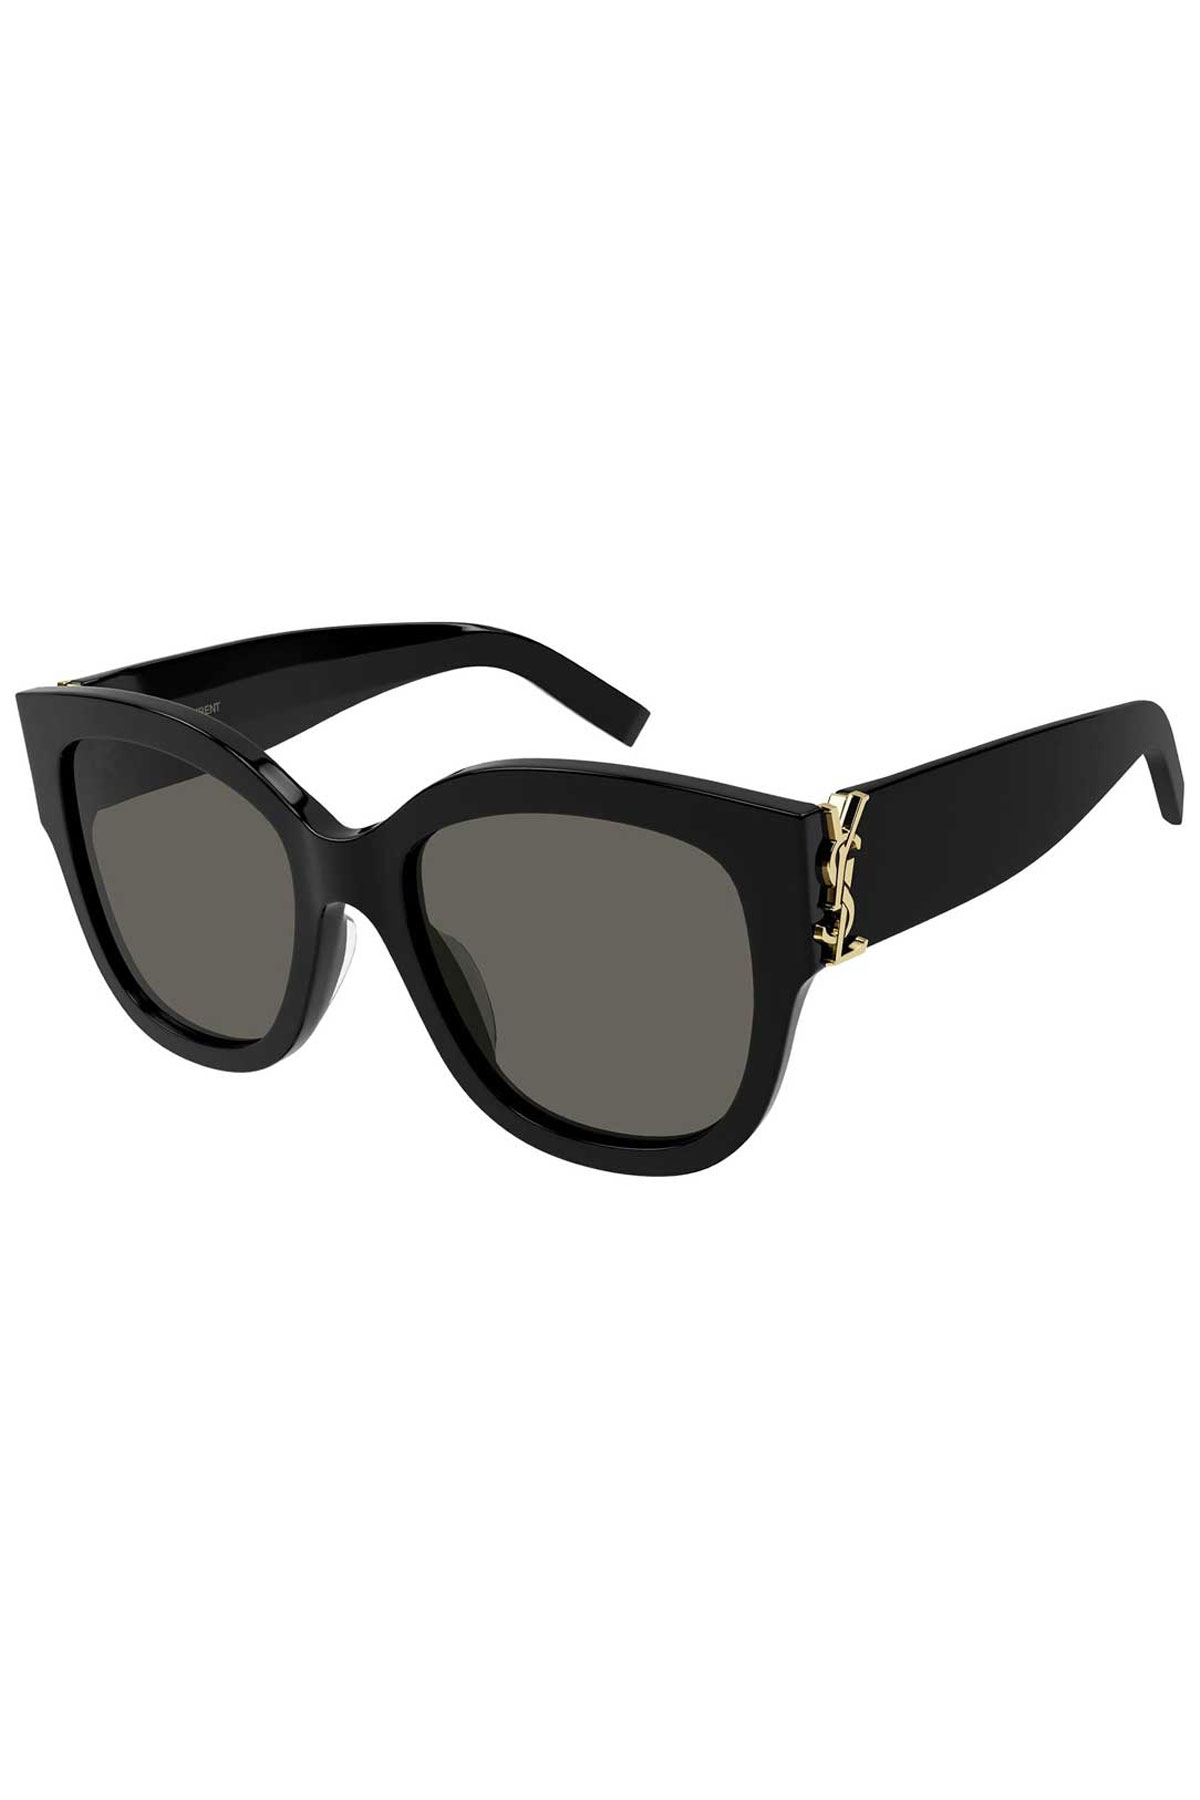 Saint Laurent SL 570 Women Sunglasses - Black